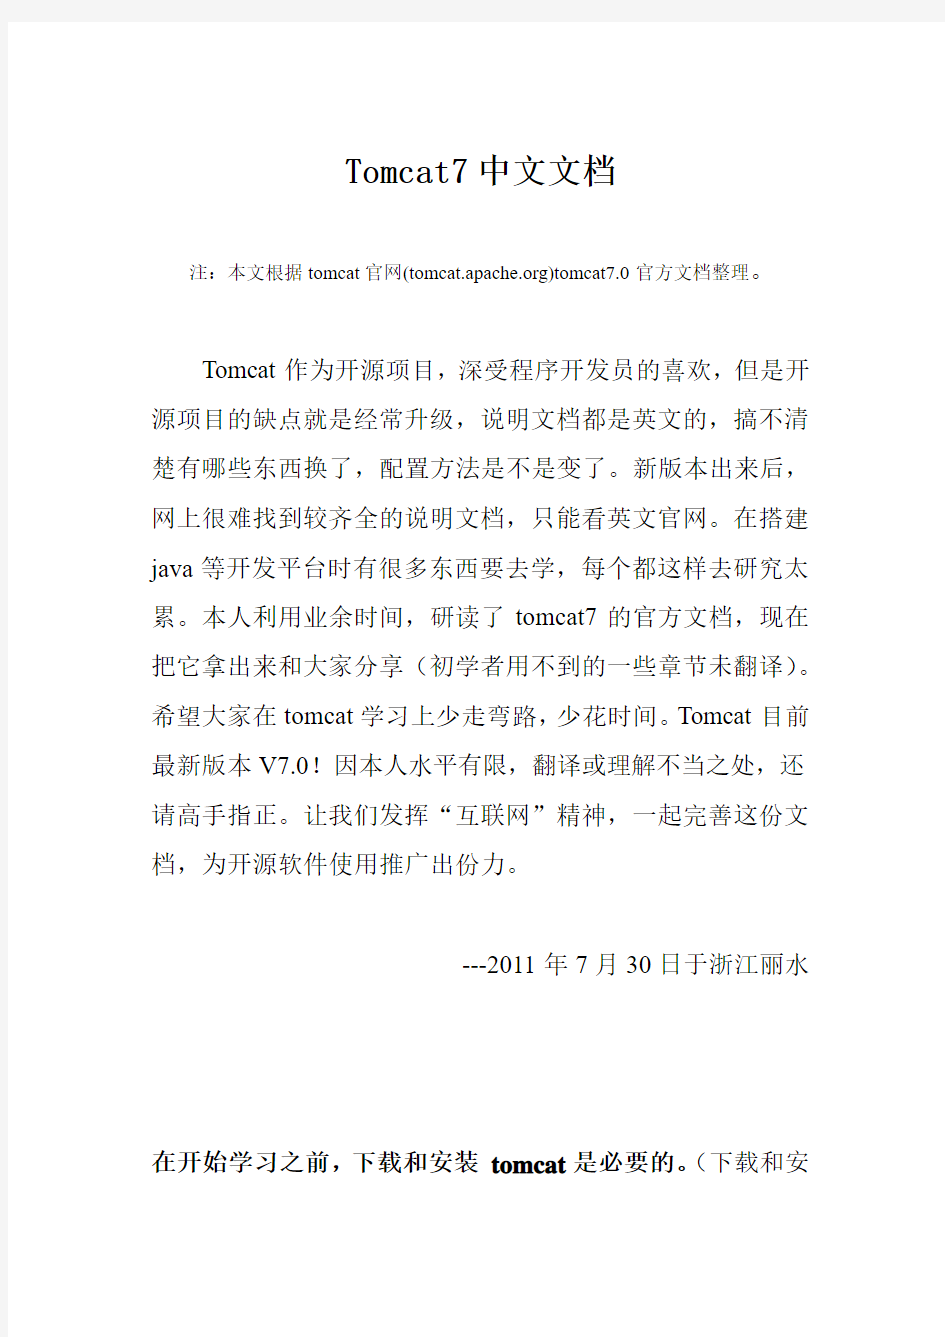 Tomcat7中文文档(配置说明详解)